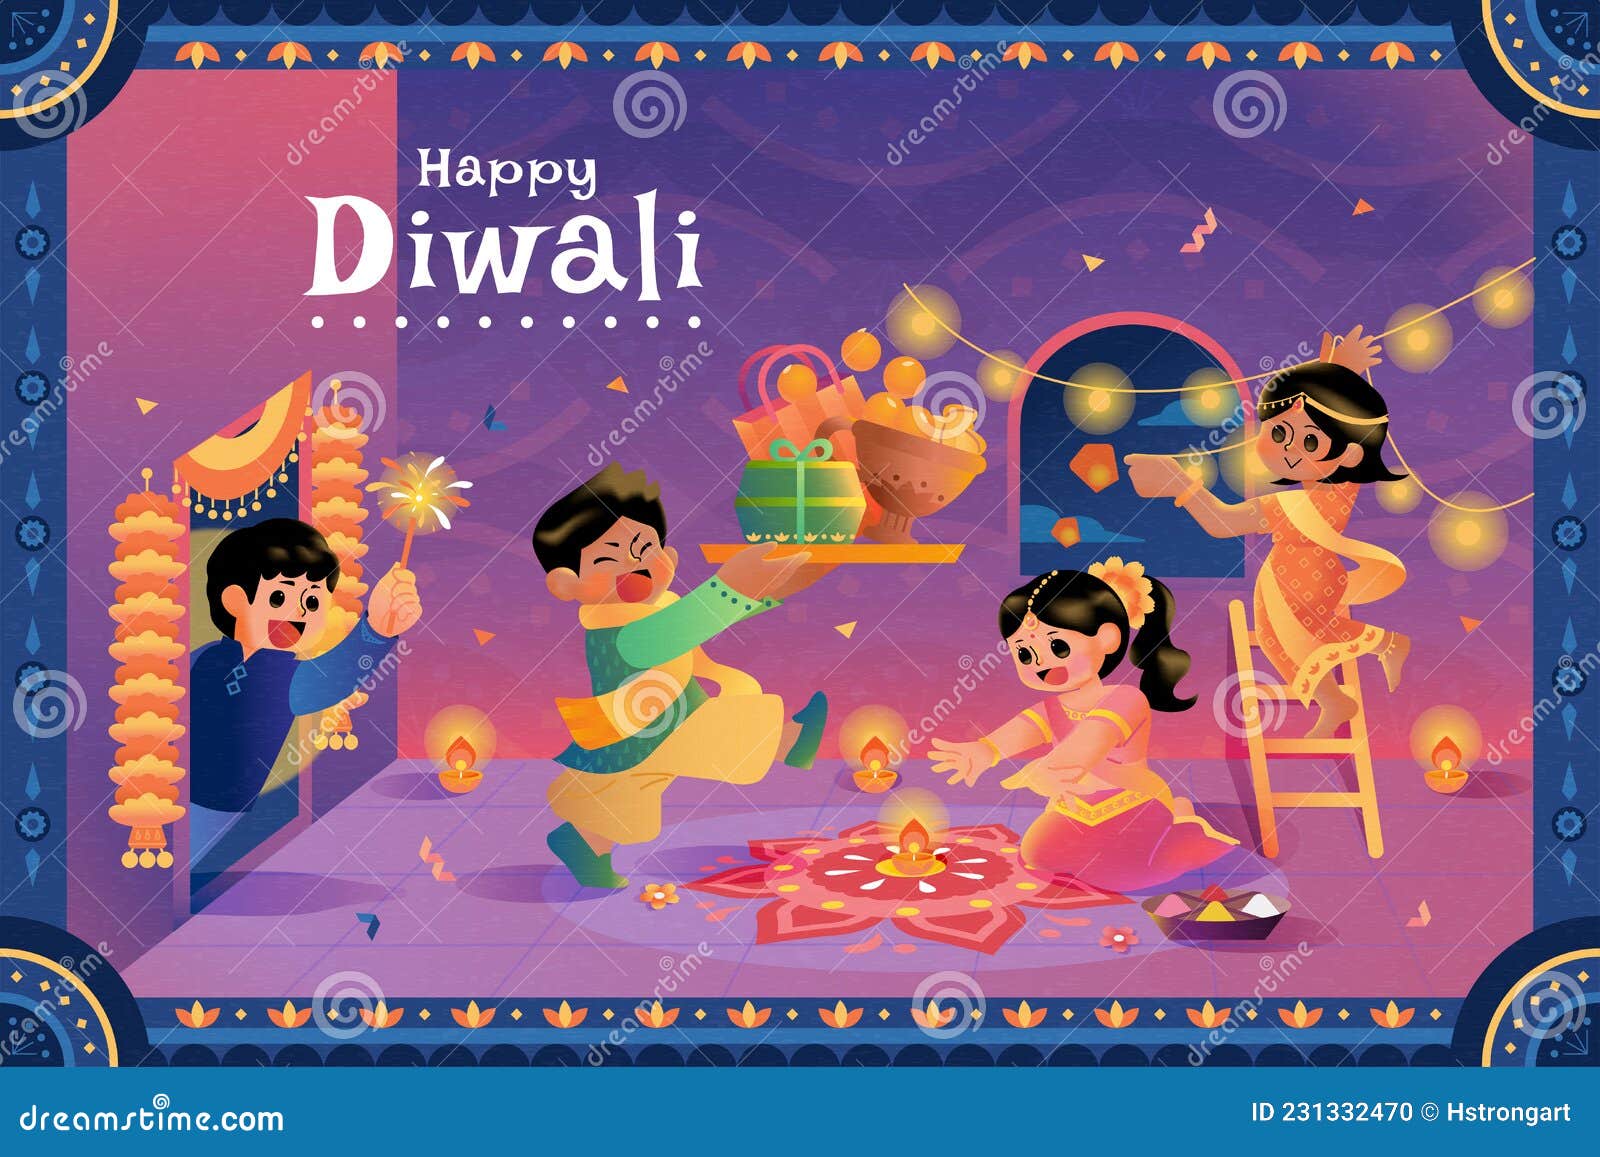 Happy Diwali card design stock vector. Illustration of light - 231332470